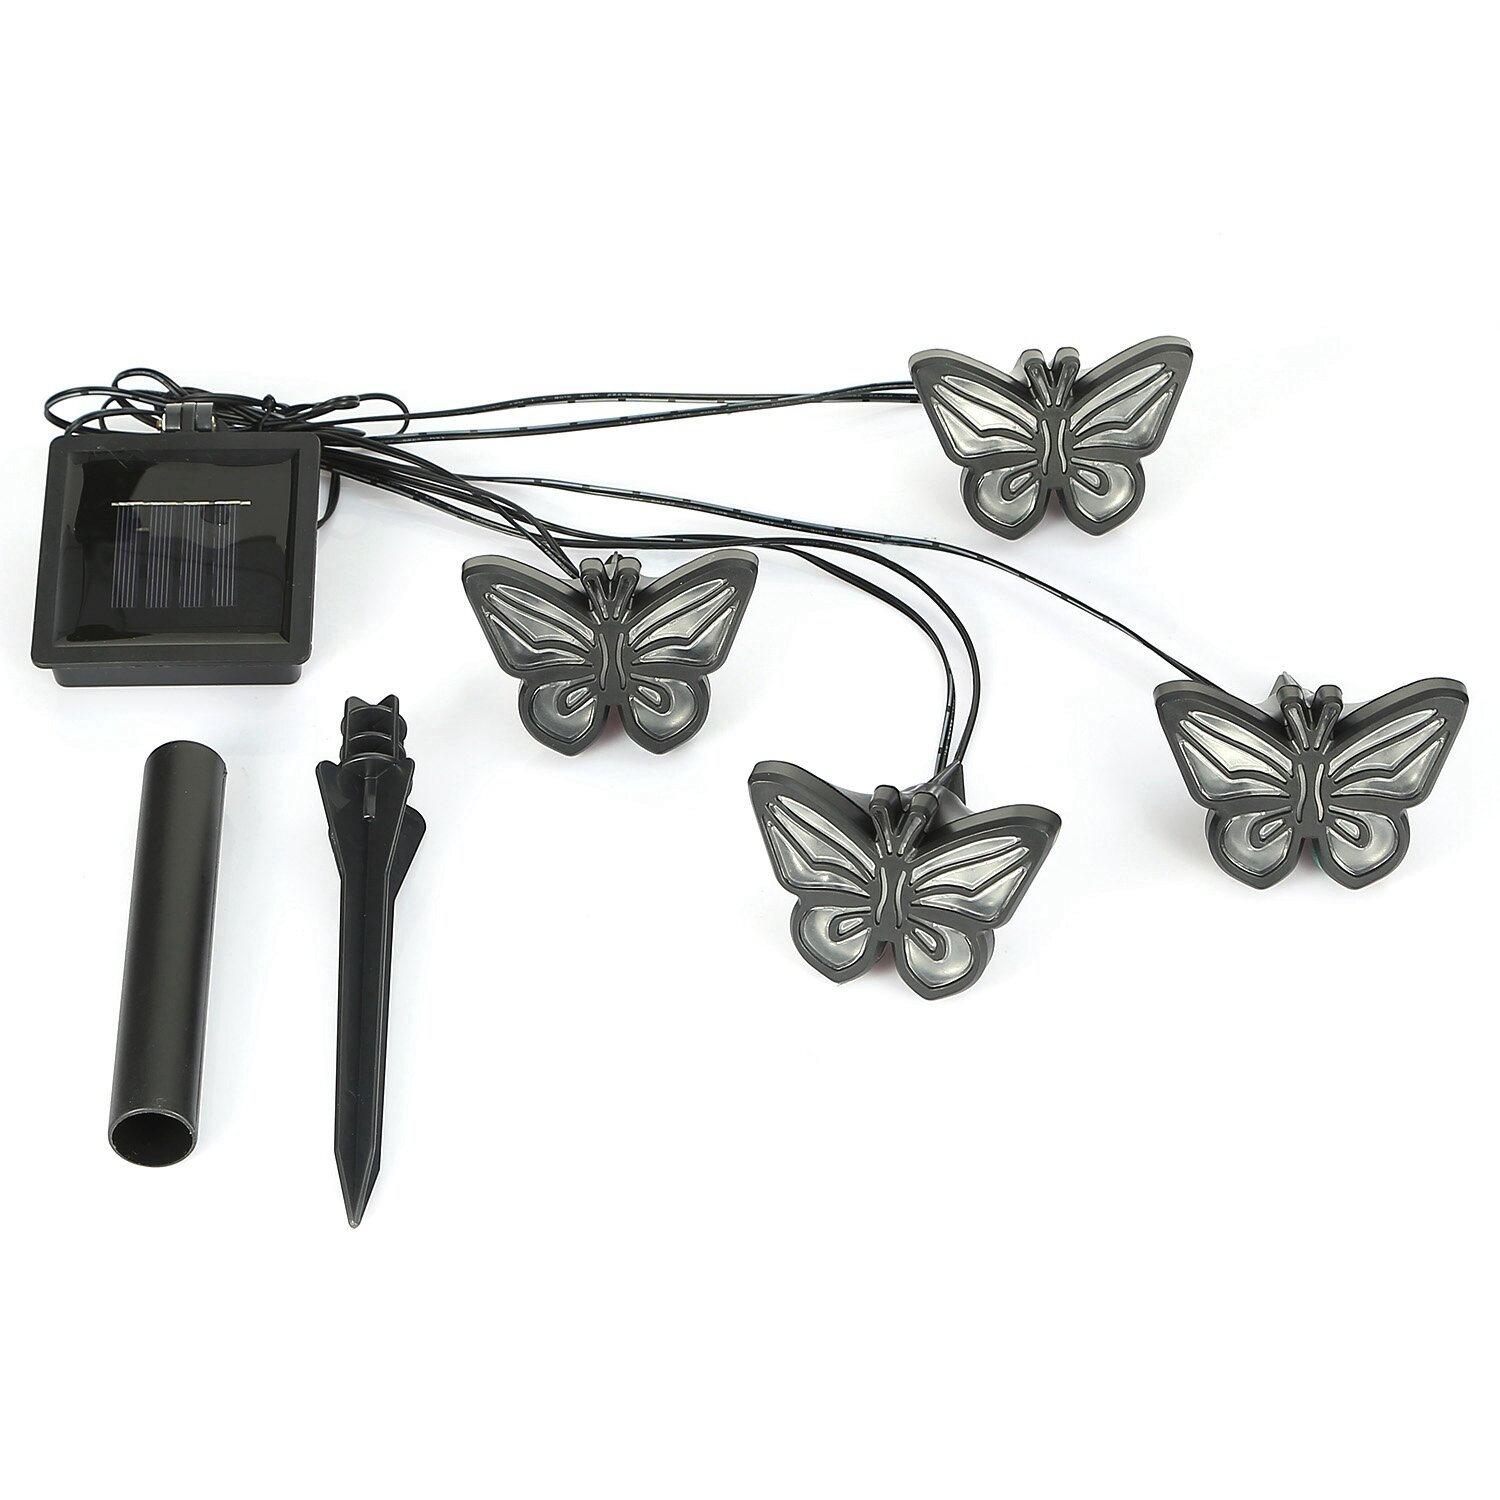 Details about   Solar String Fairy Light 4pcs Butterfly Lights Garden Lawn Yard Decor Lamp US 